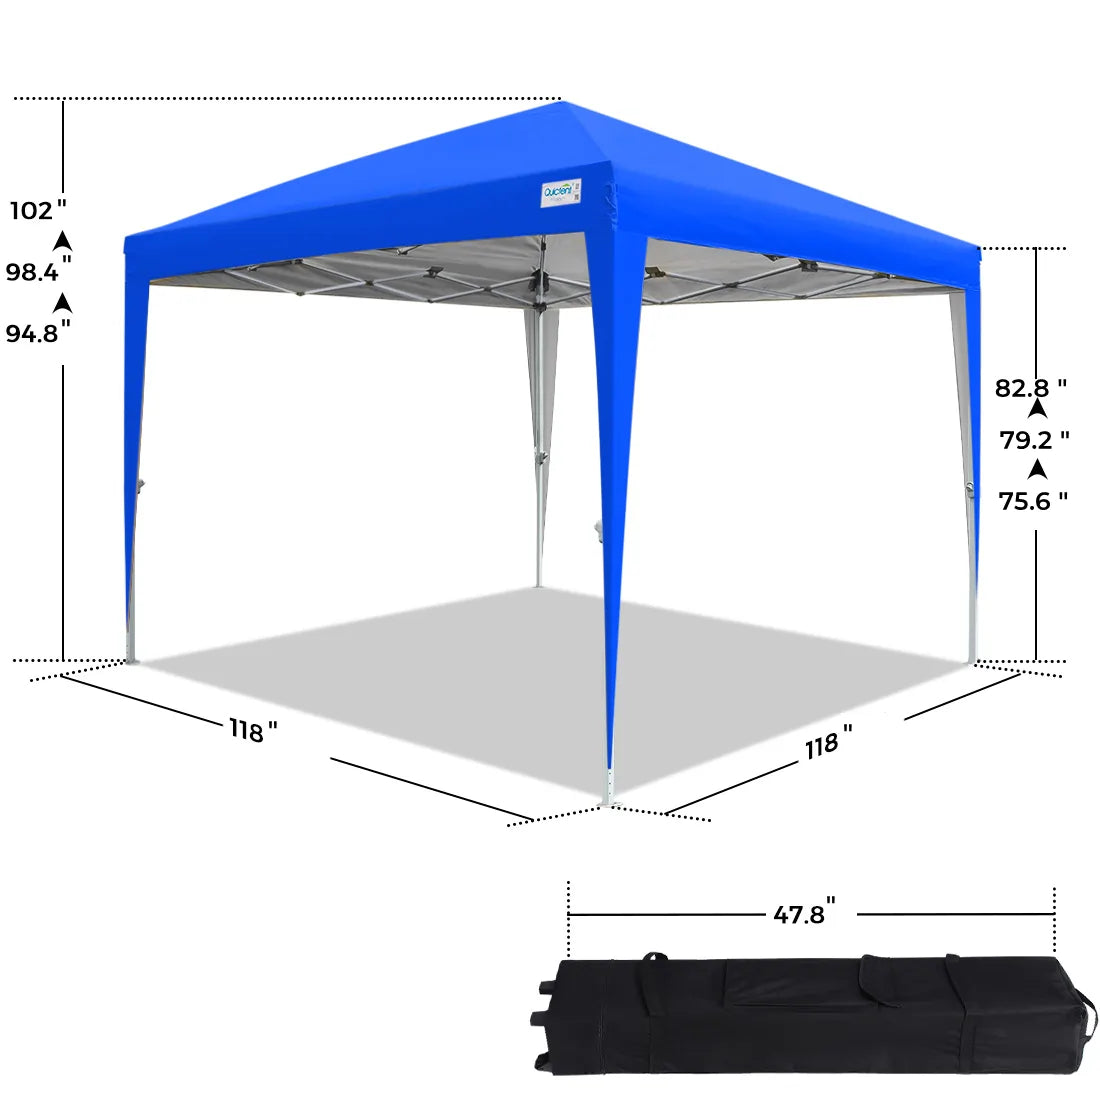 Blue no side 10x10 canopy tent size#color_ royal blue